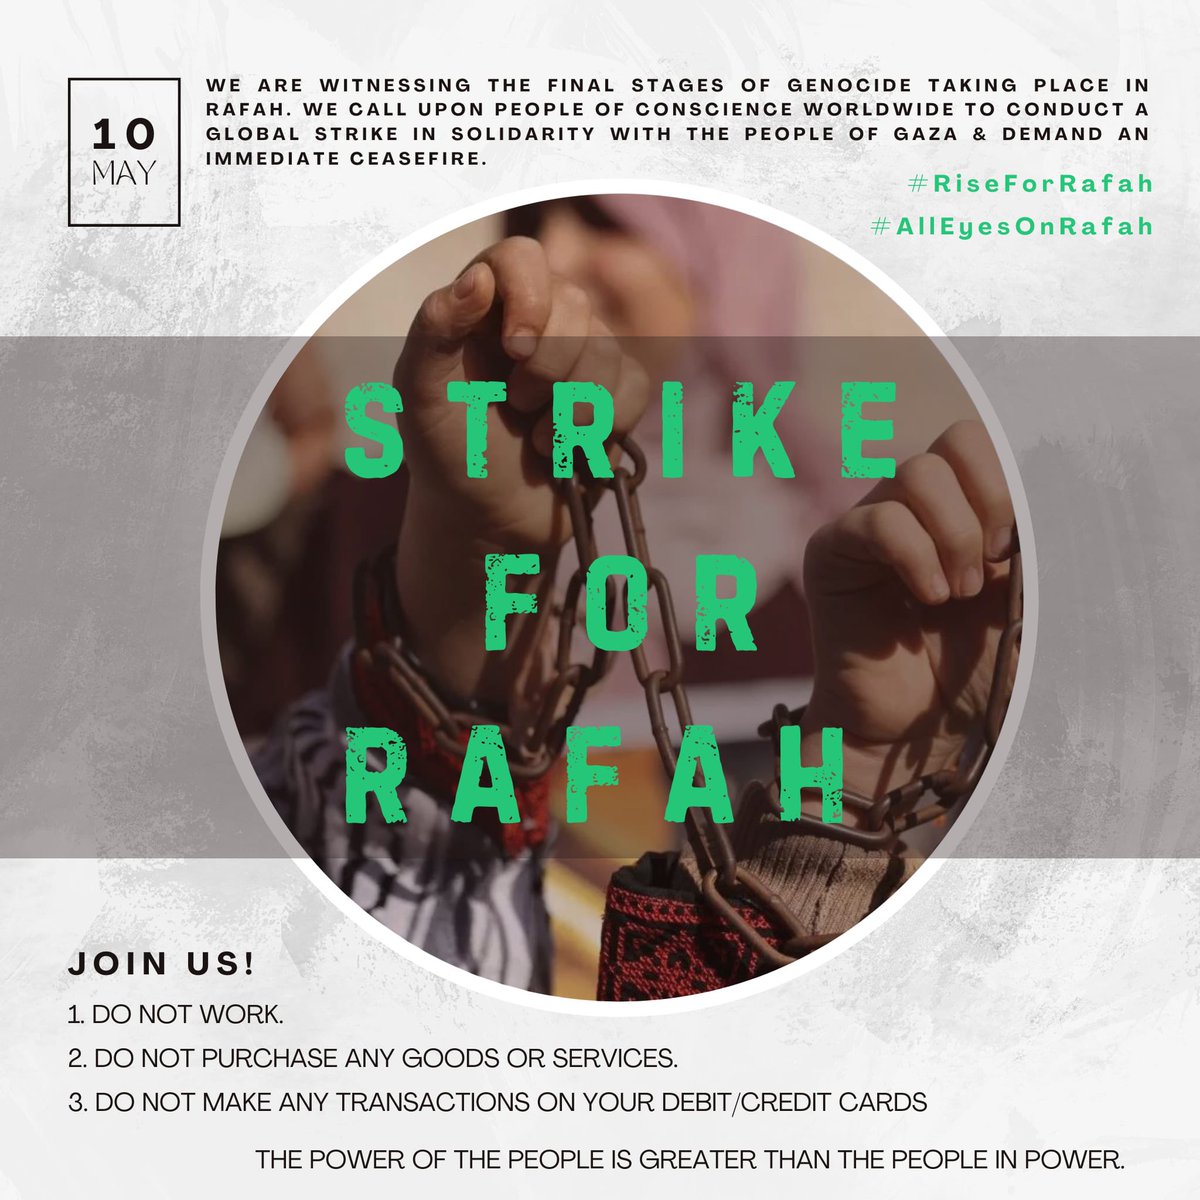 Please join #GlobalStrikeForRafah tomorrow. #RiseForRafah #AllEyesOnRafah